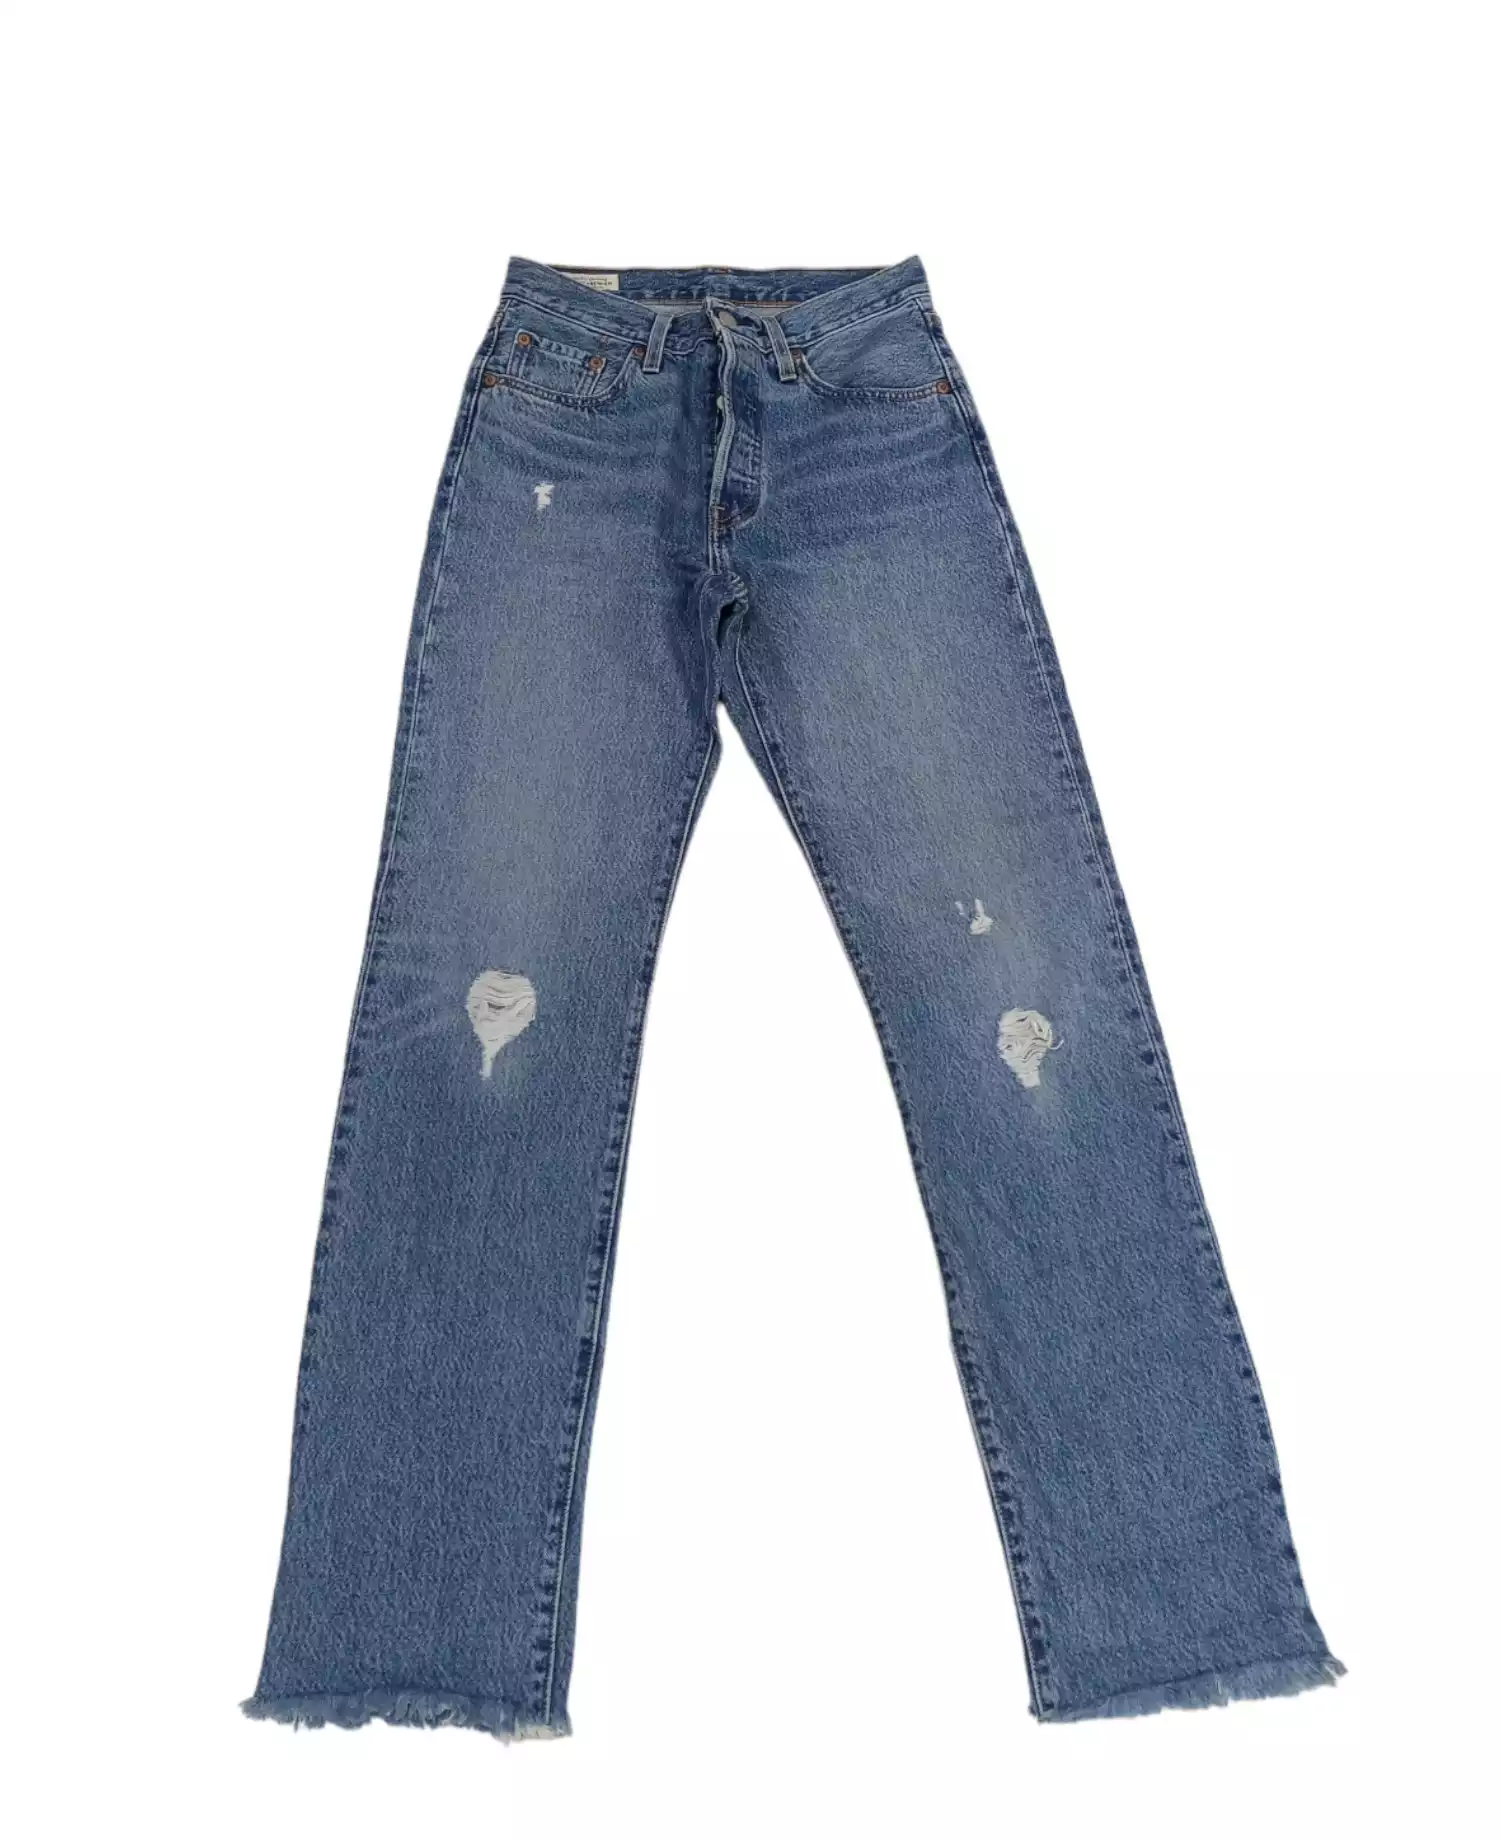 Denim Jeans by Levi's